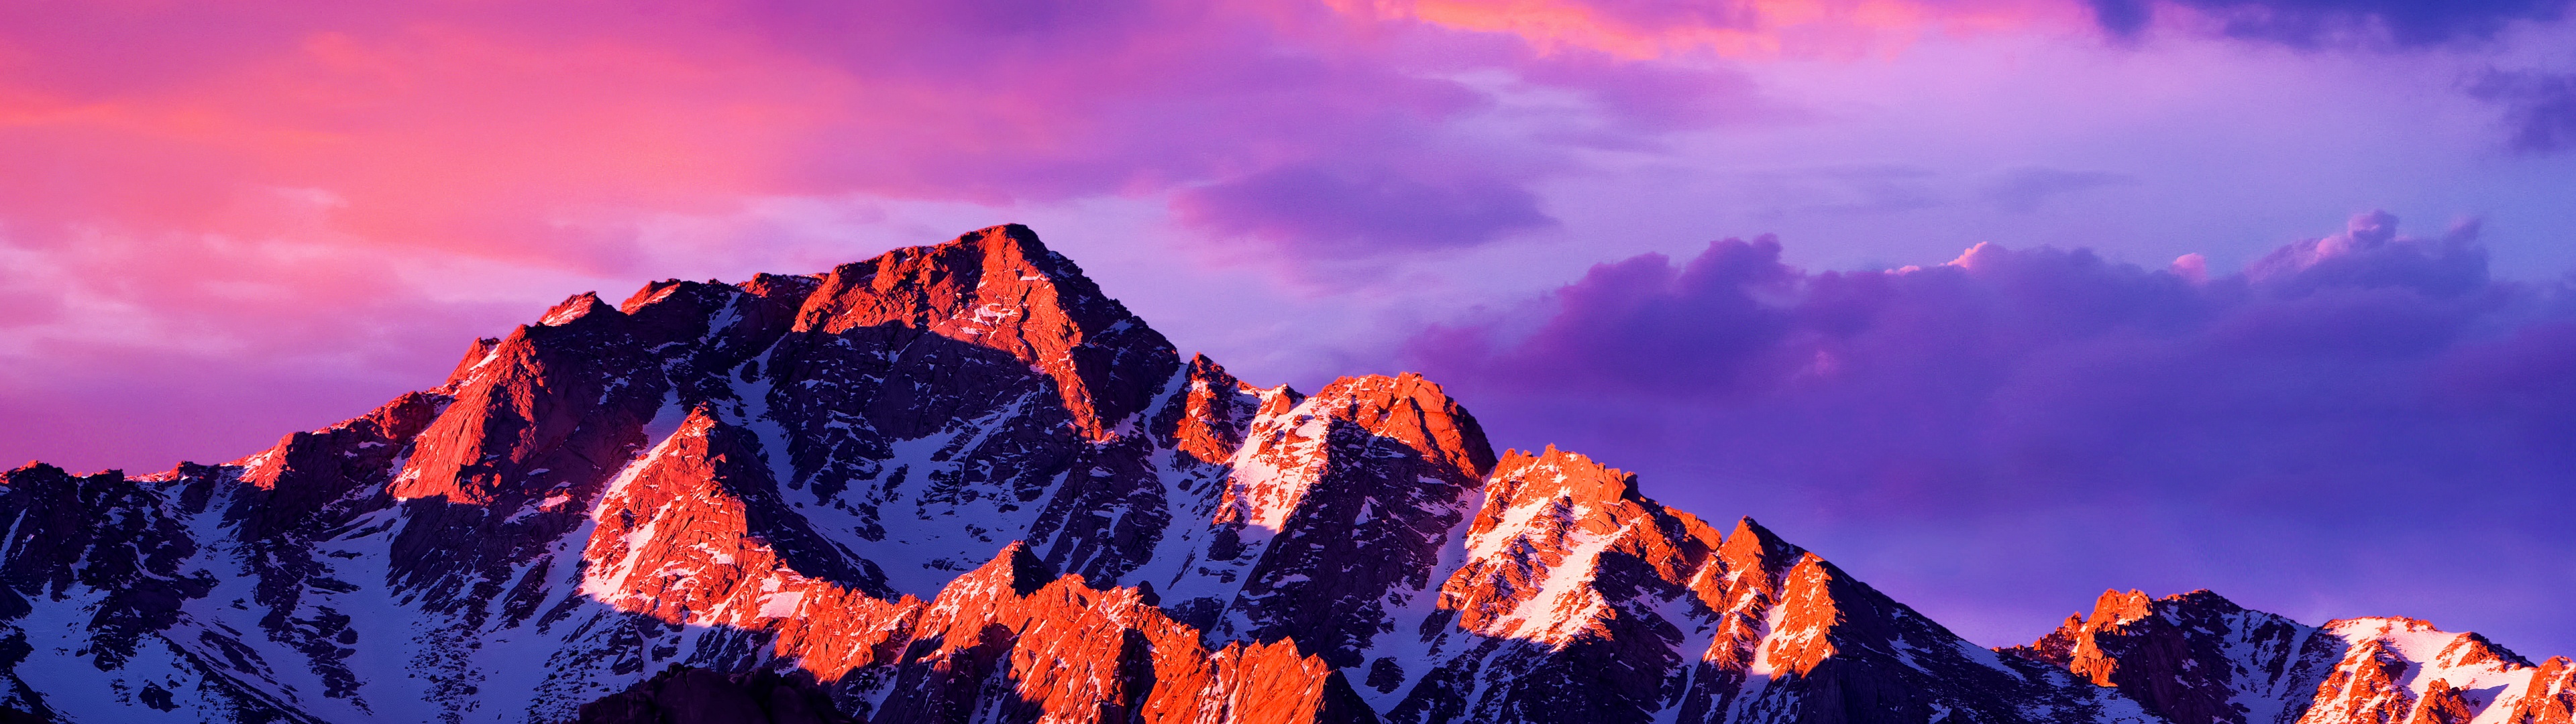 macOS Sierra Wallpaper 4K, Glacier mountains, Nature